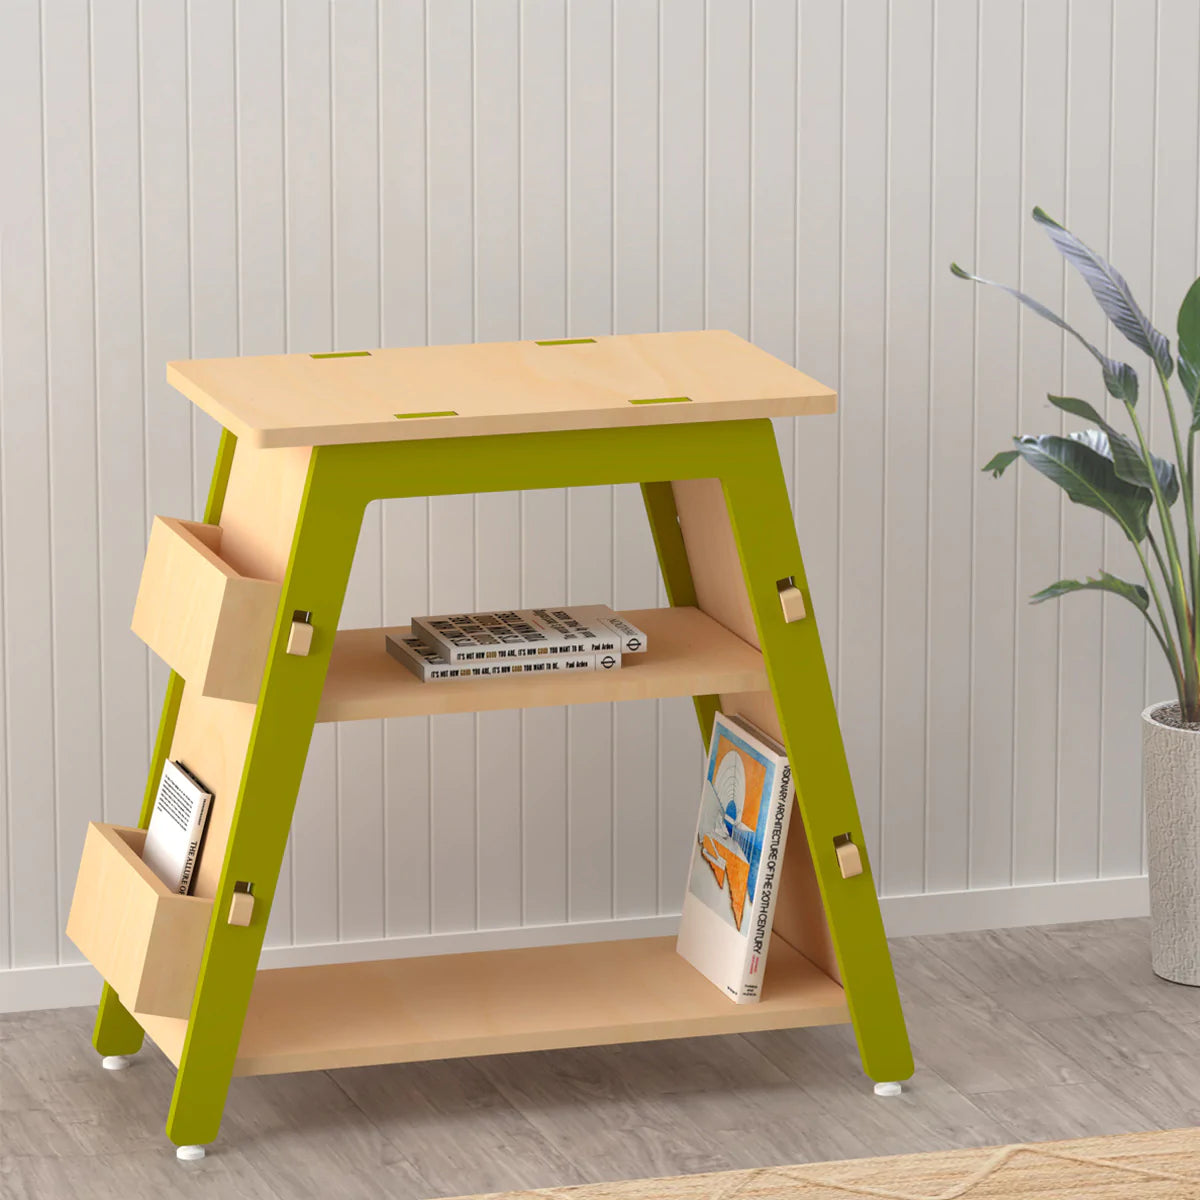 Buy Red Pear Wooden Bookshelf - Green - Learning Furniture - SkilloToys.com